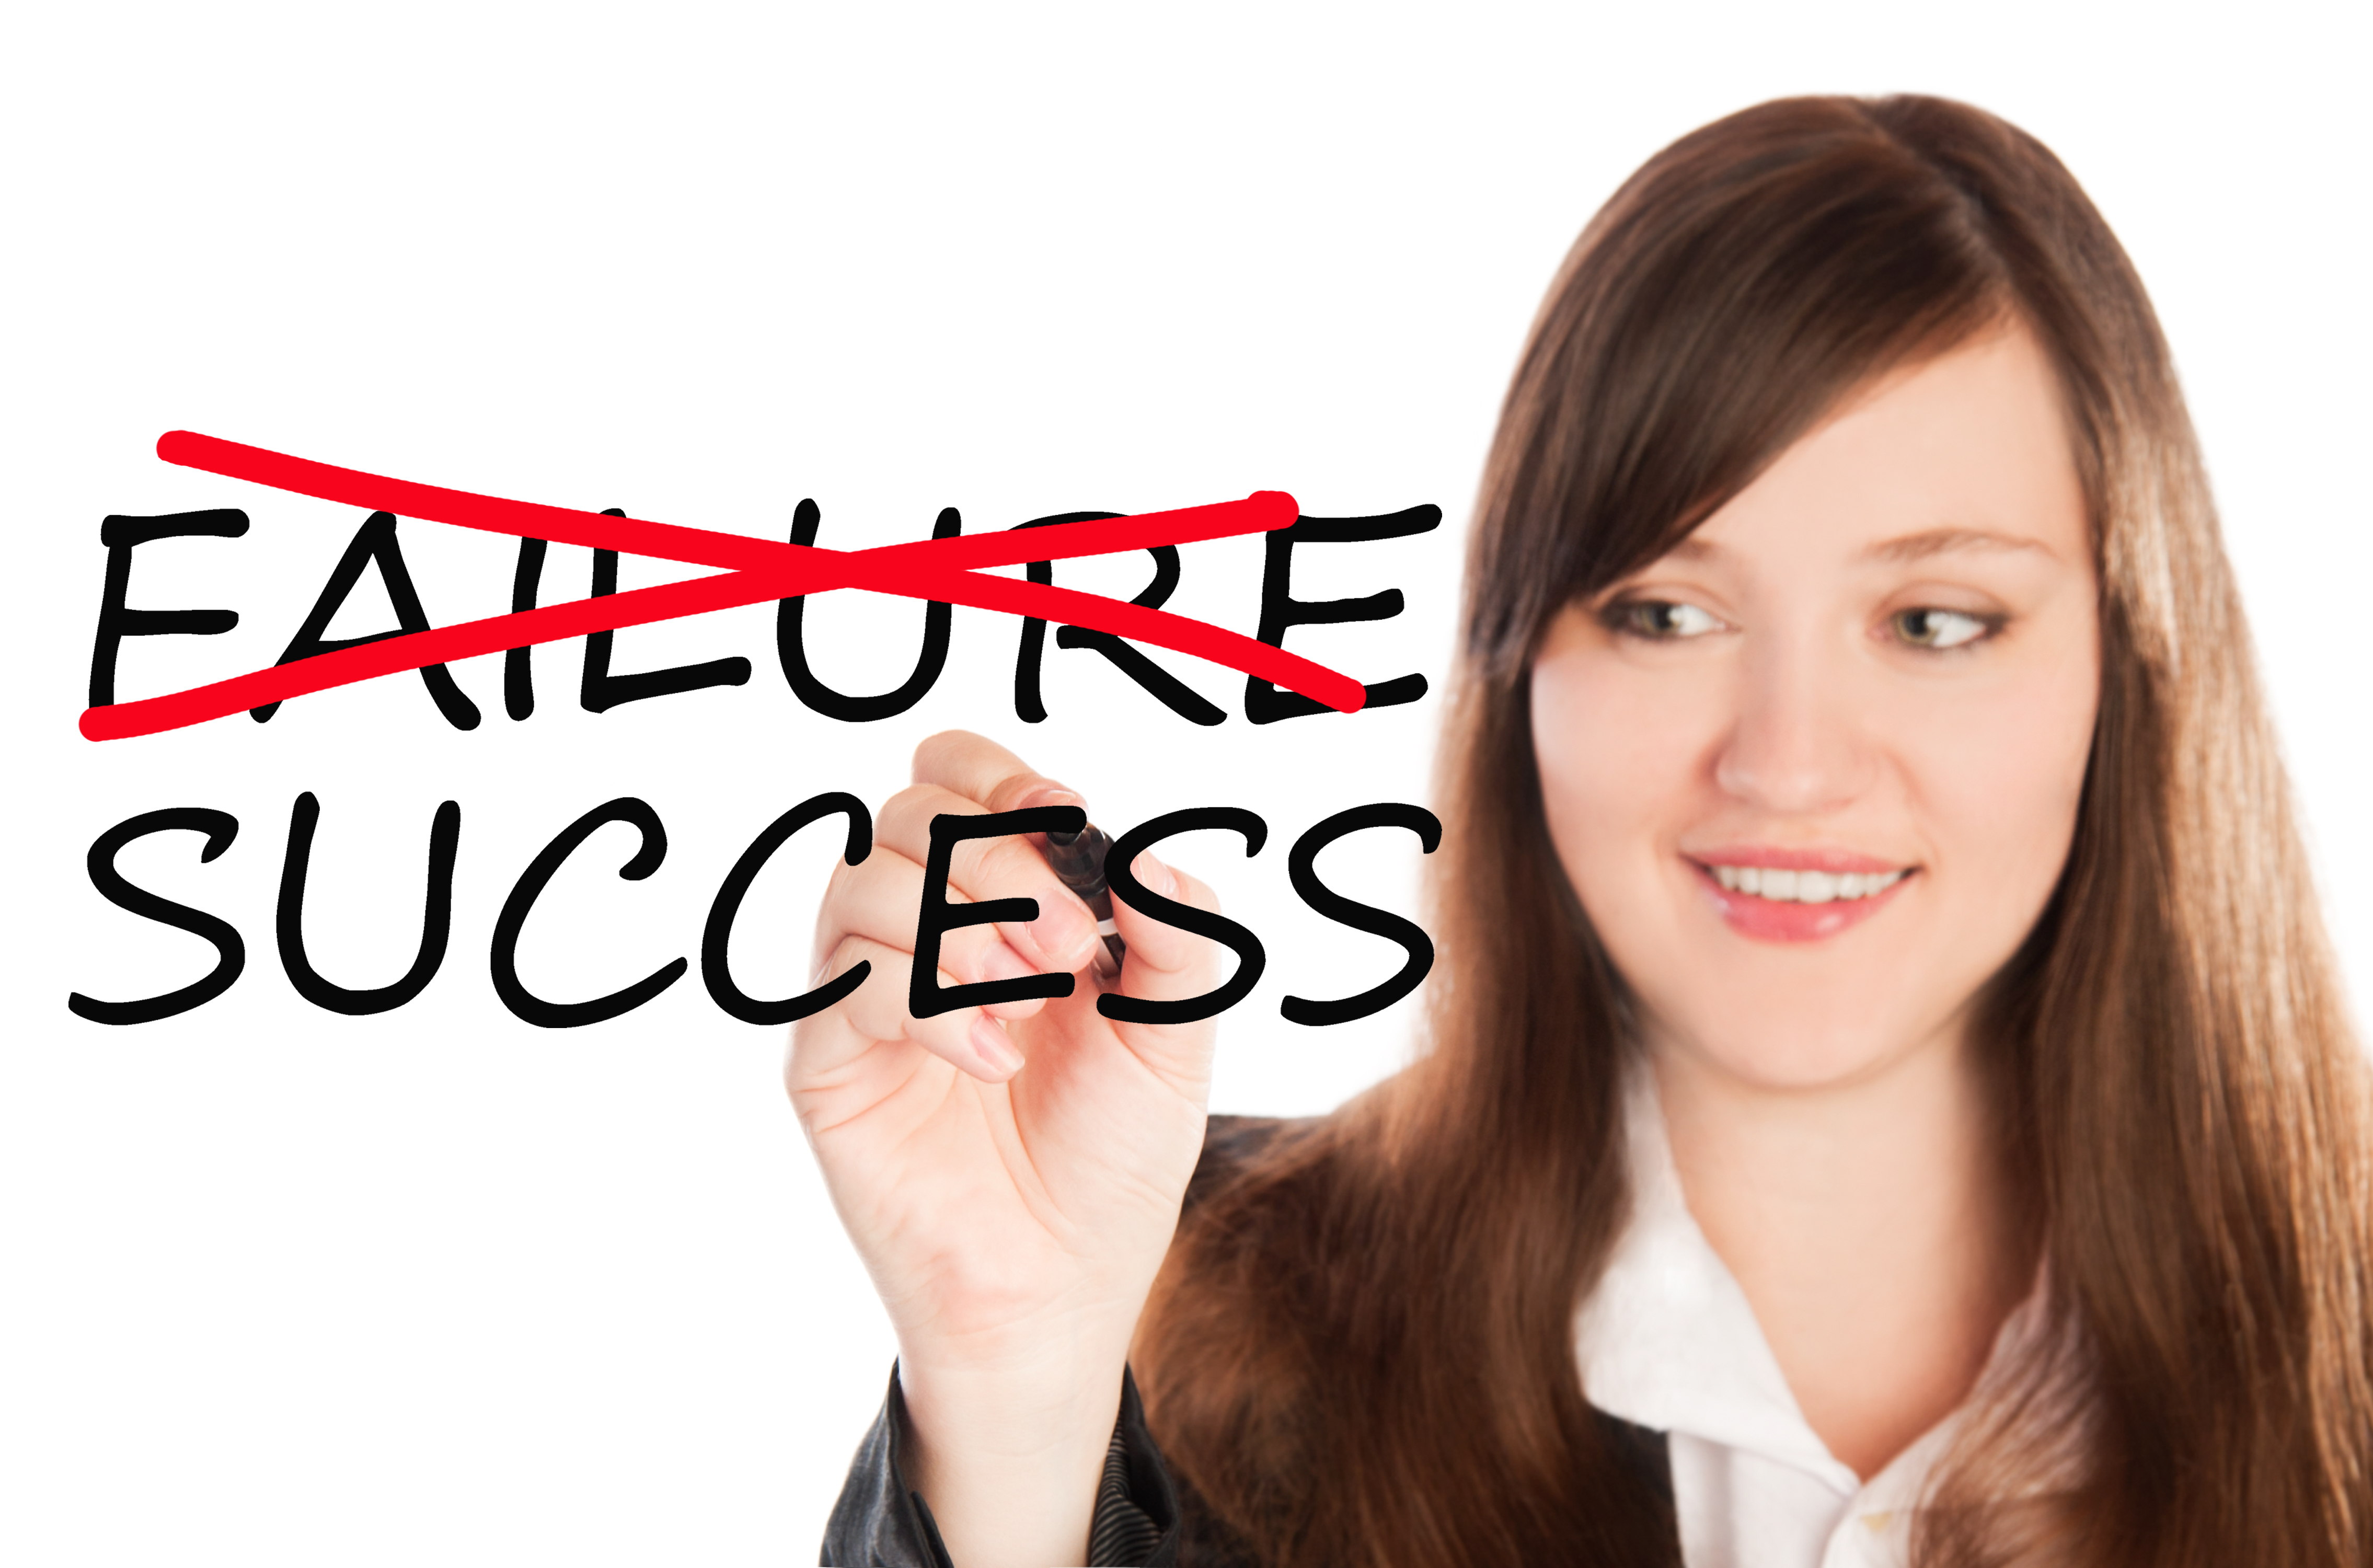 Leadership: Success is Failure Turned Inside Out